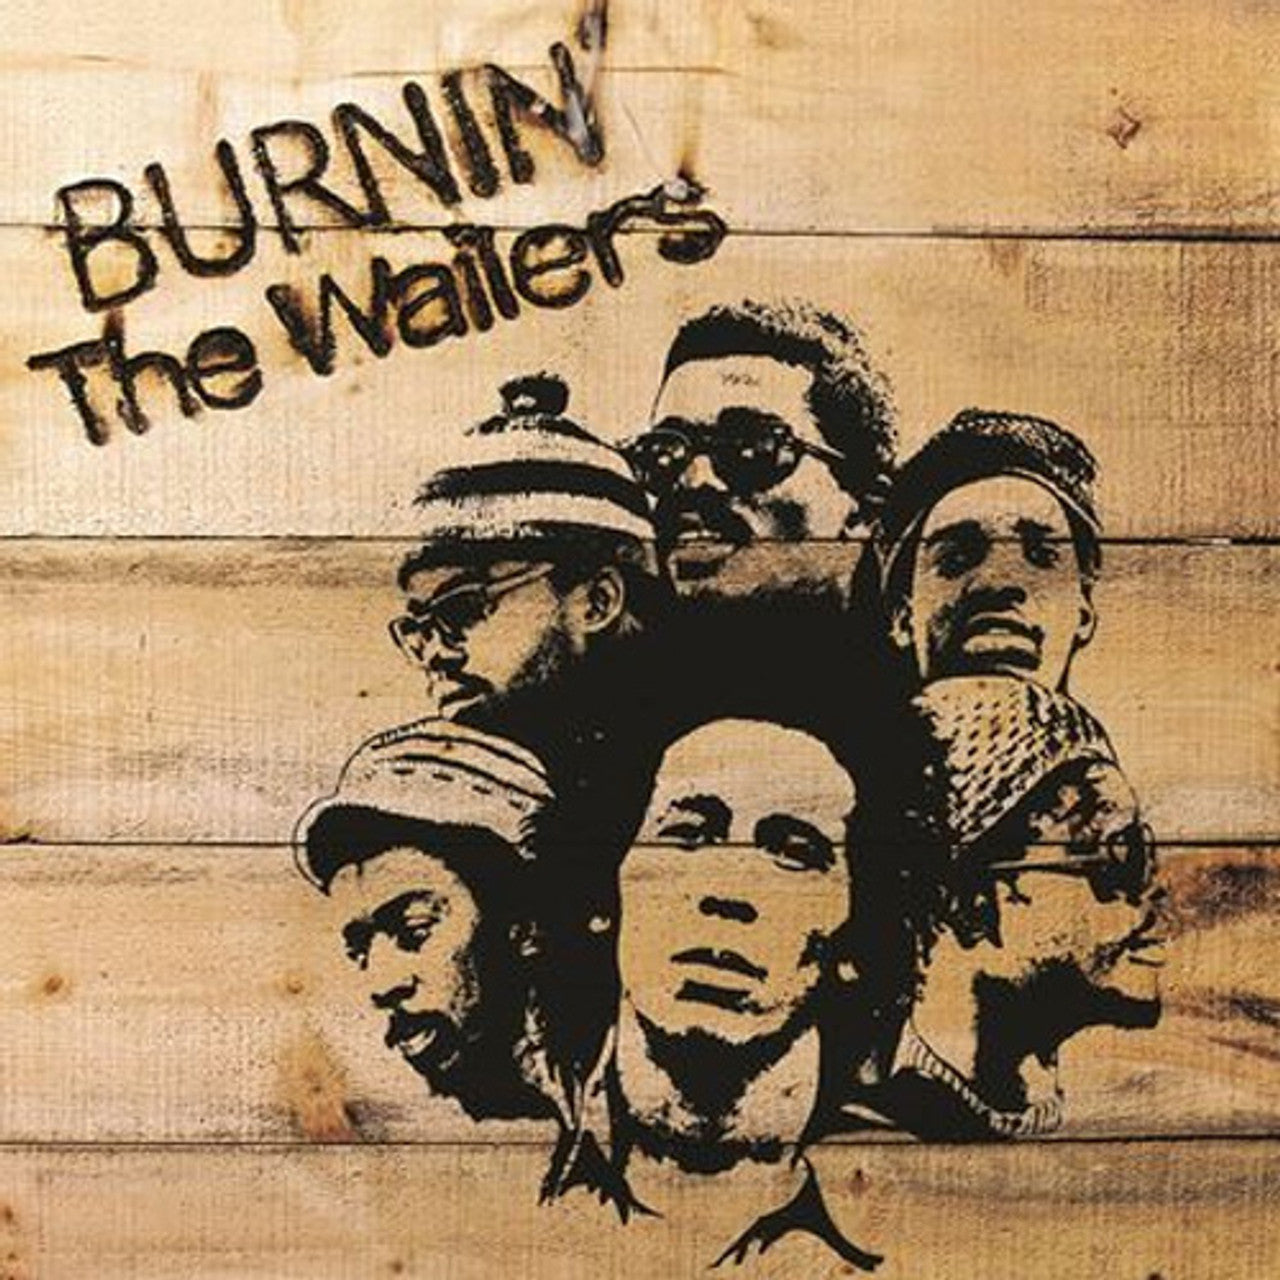 Bob Marley &amp; the Wailers - Burnin' - Tuff Gong LP